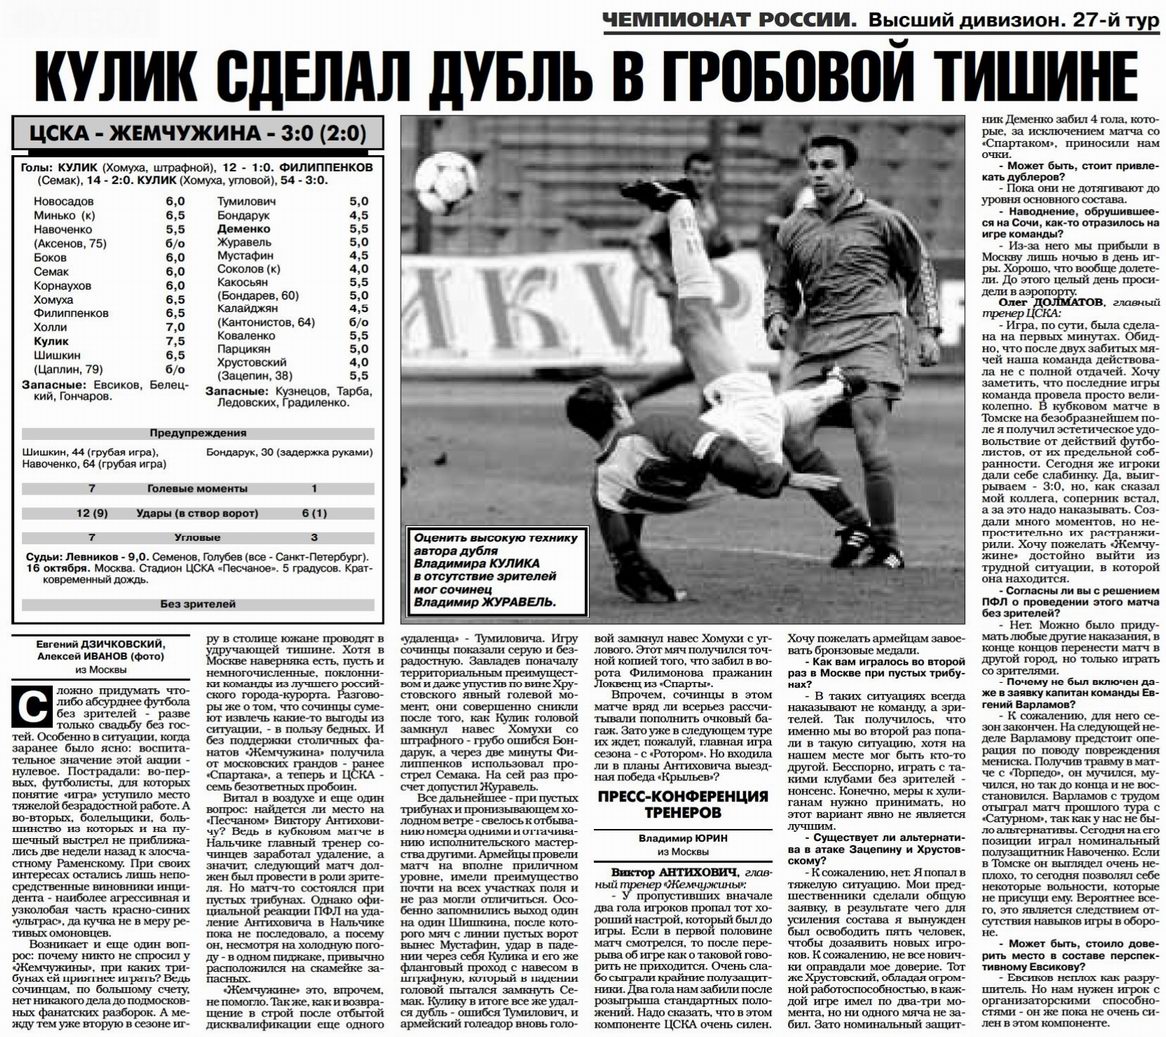 1999-10-16.CSKA-Jemchugina